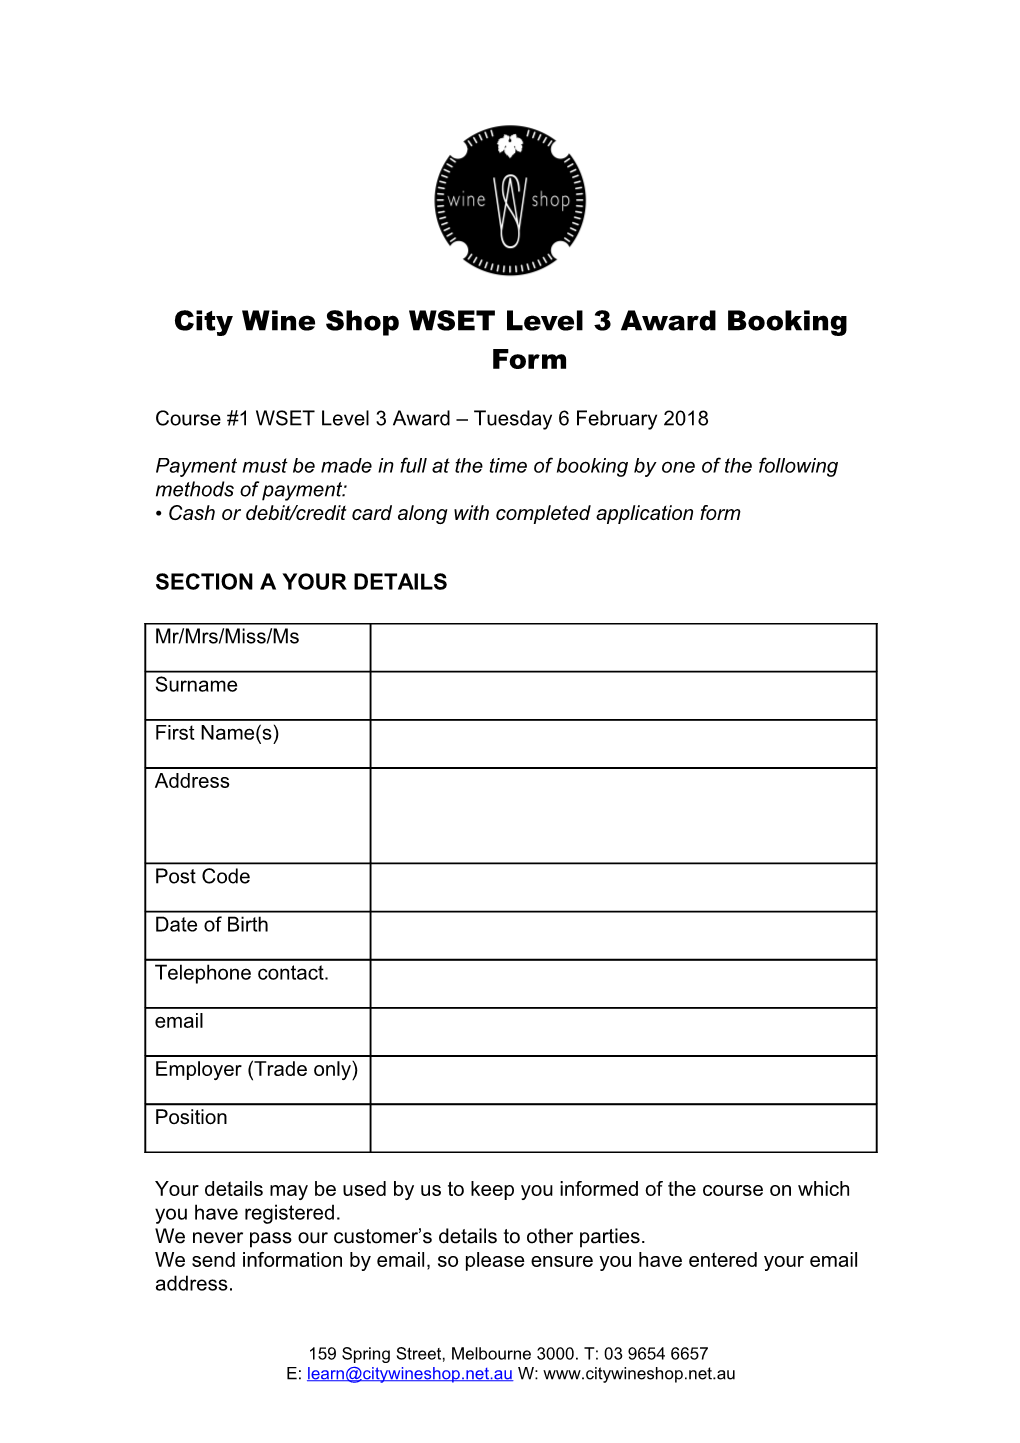 WSET Level 2 Award Booking Form